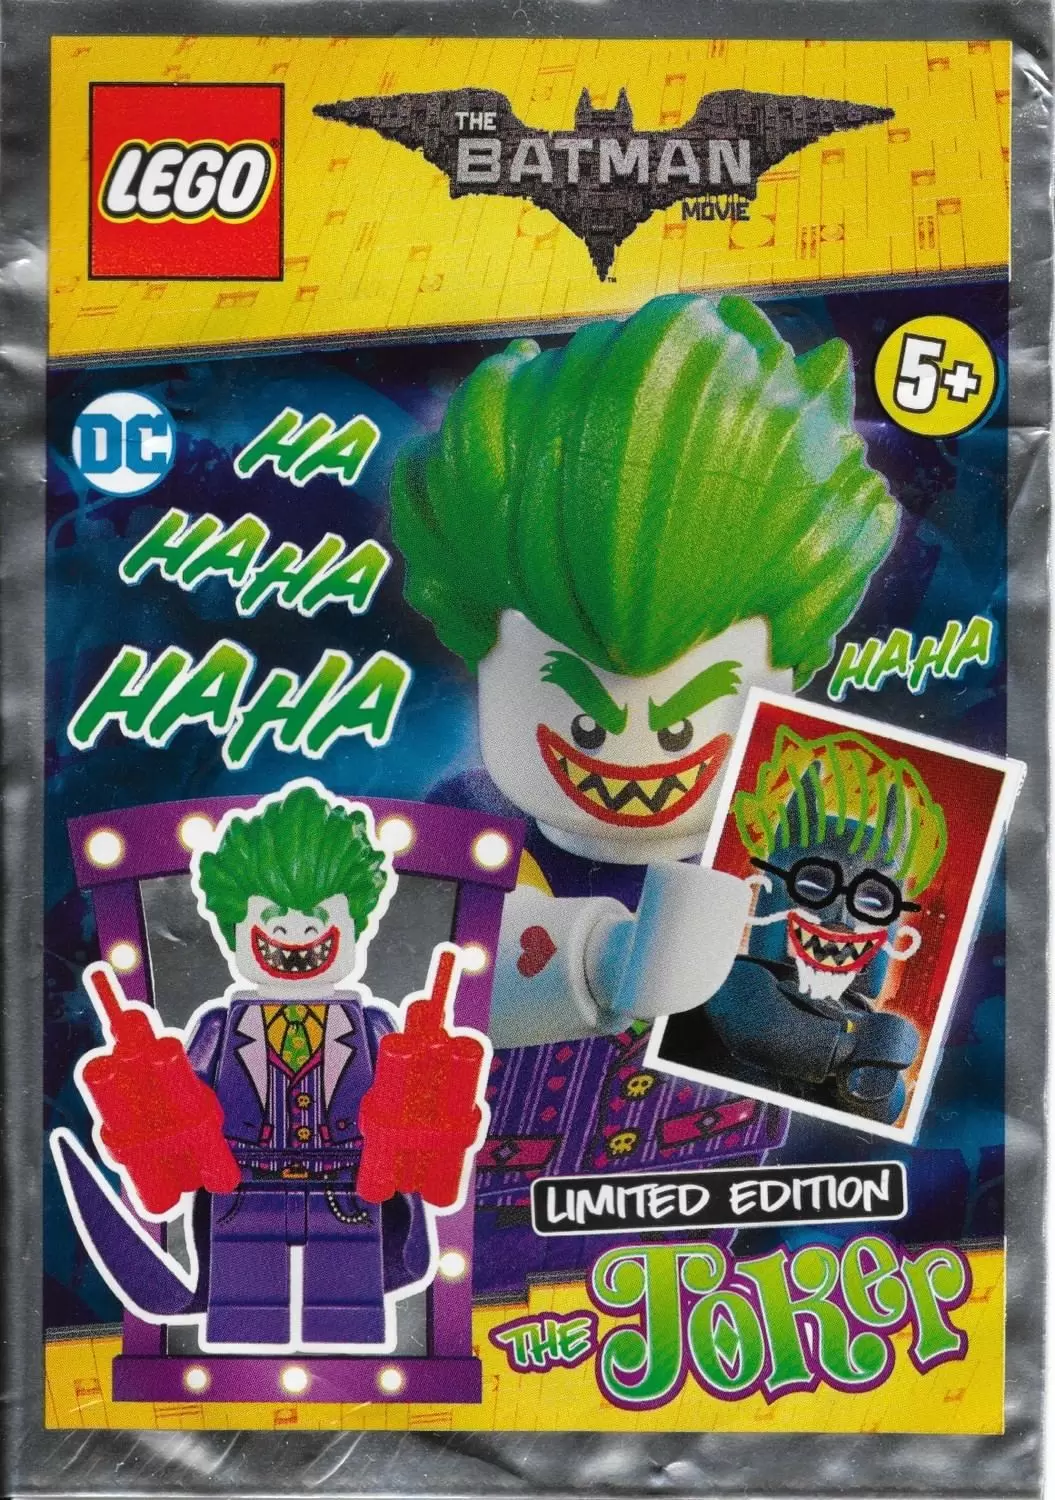 The LEGO Batman Movie - The Joker